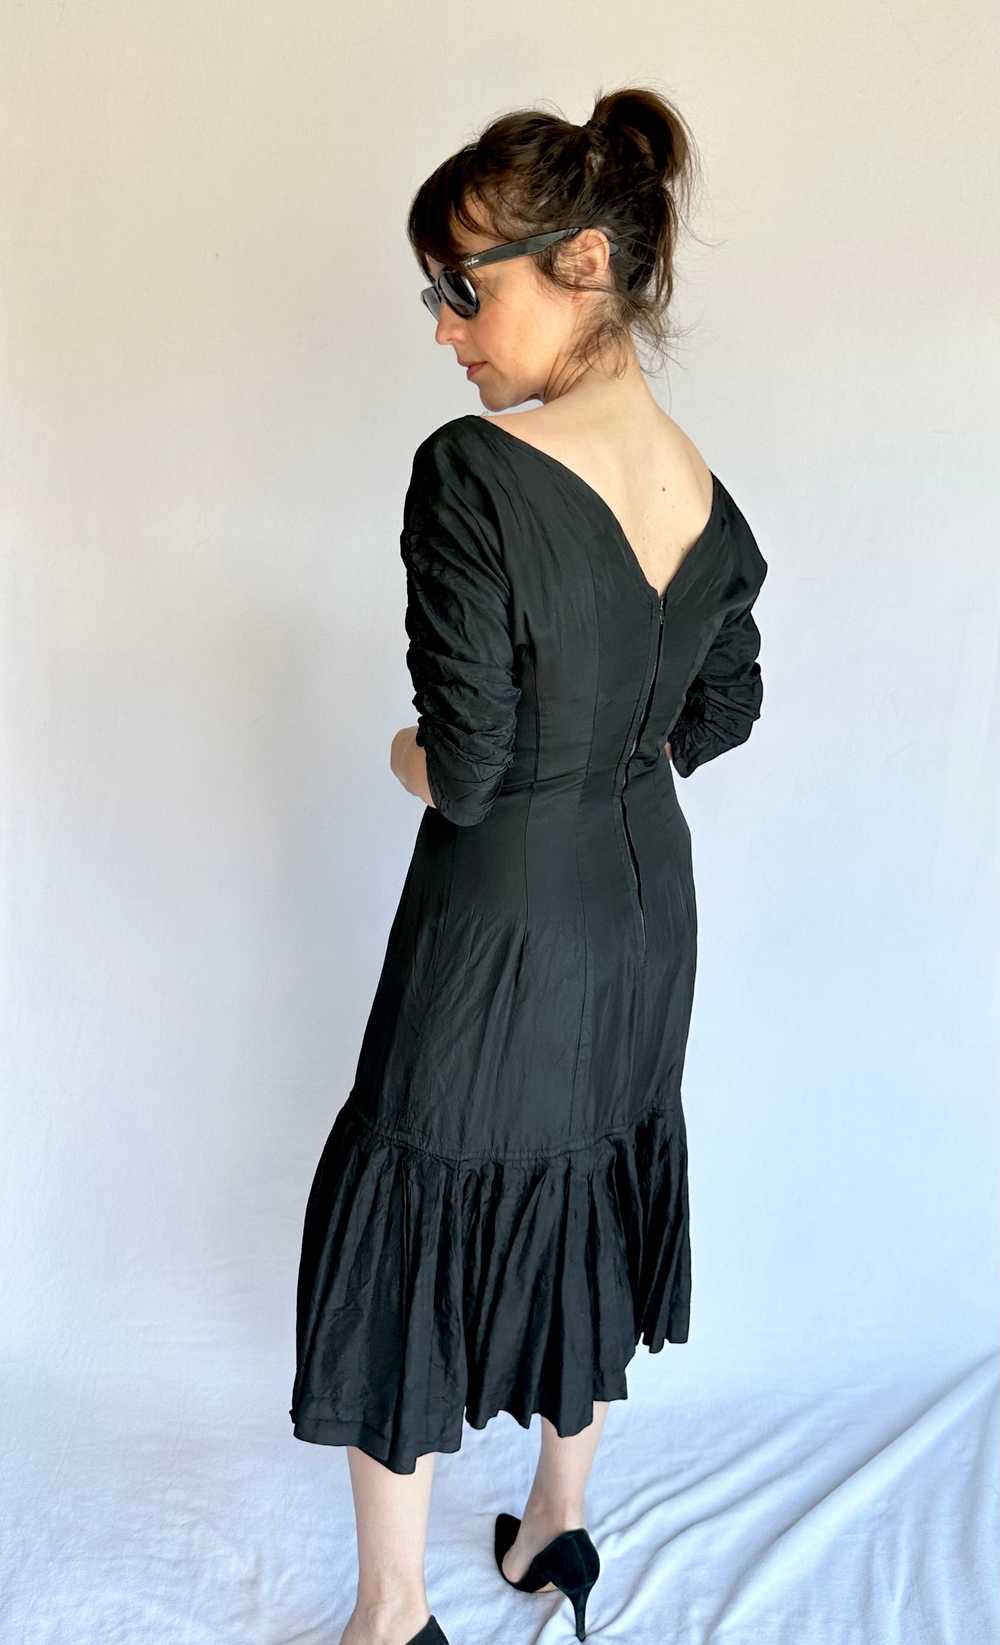 Vintage 40's Style Dress - image 5